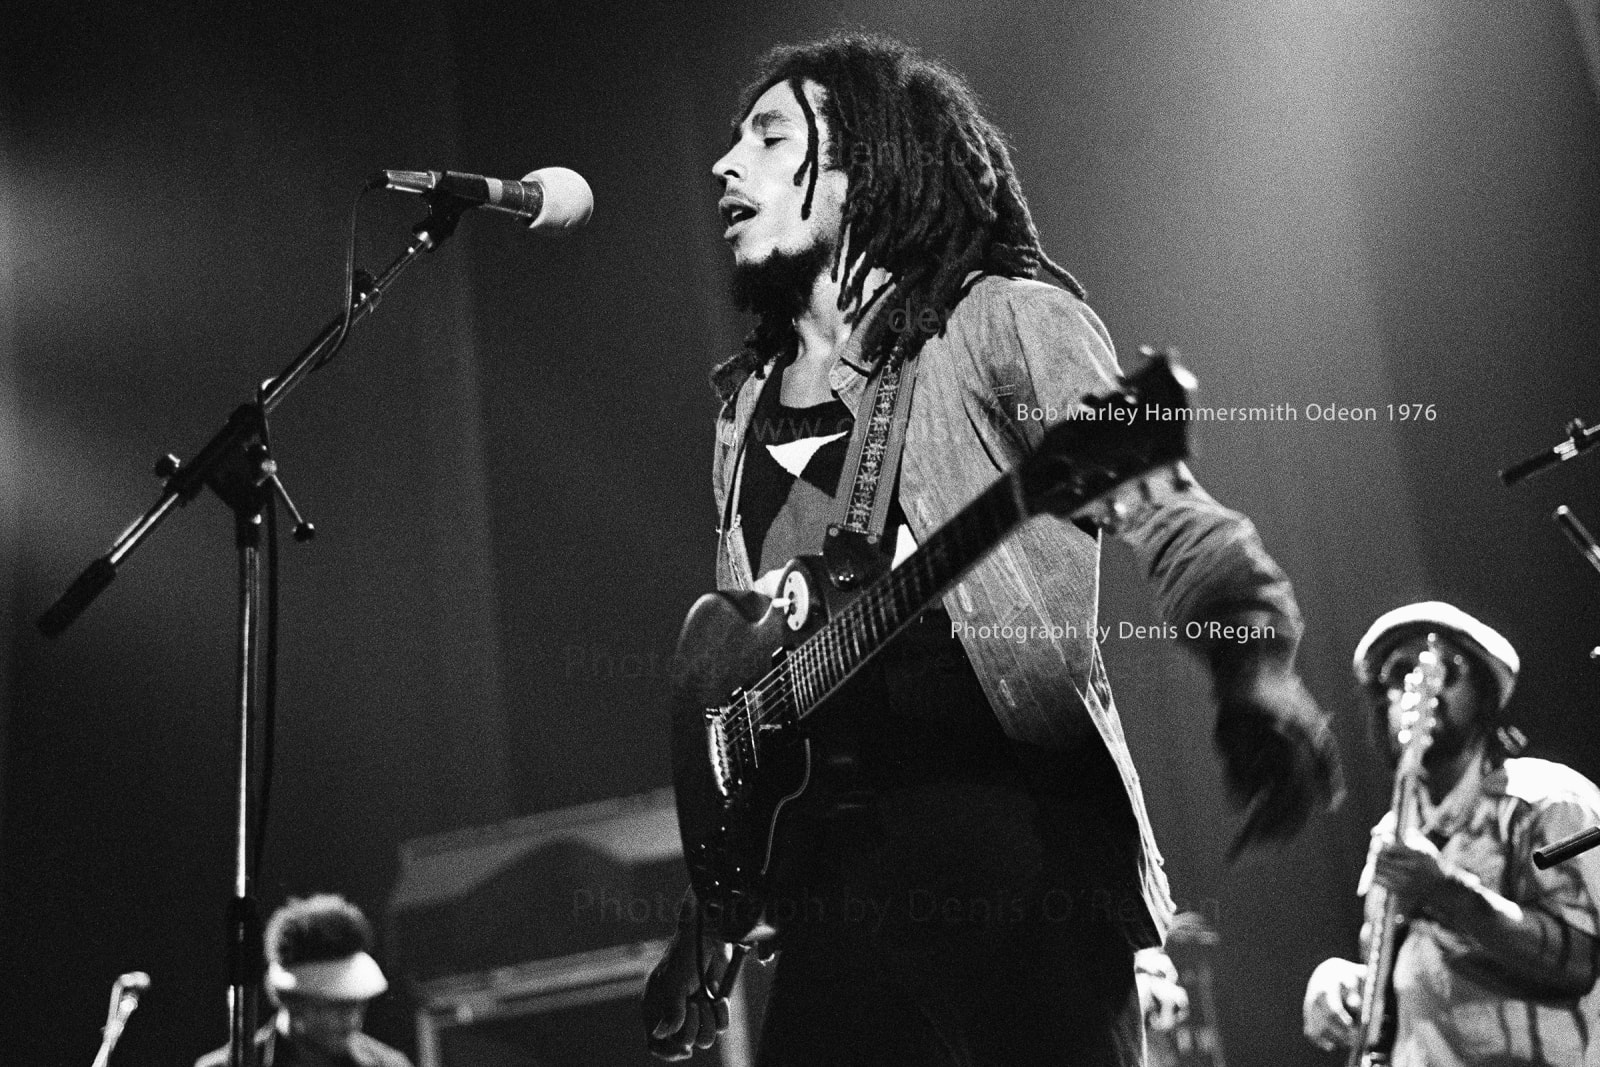 BOB MARLEY, Bob Marley Hammersmith, 1976